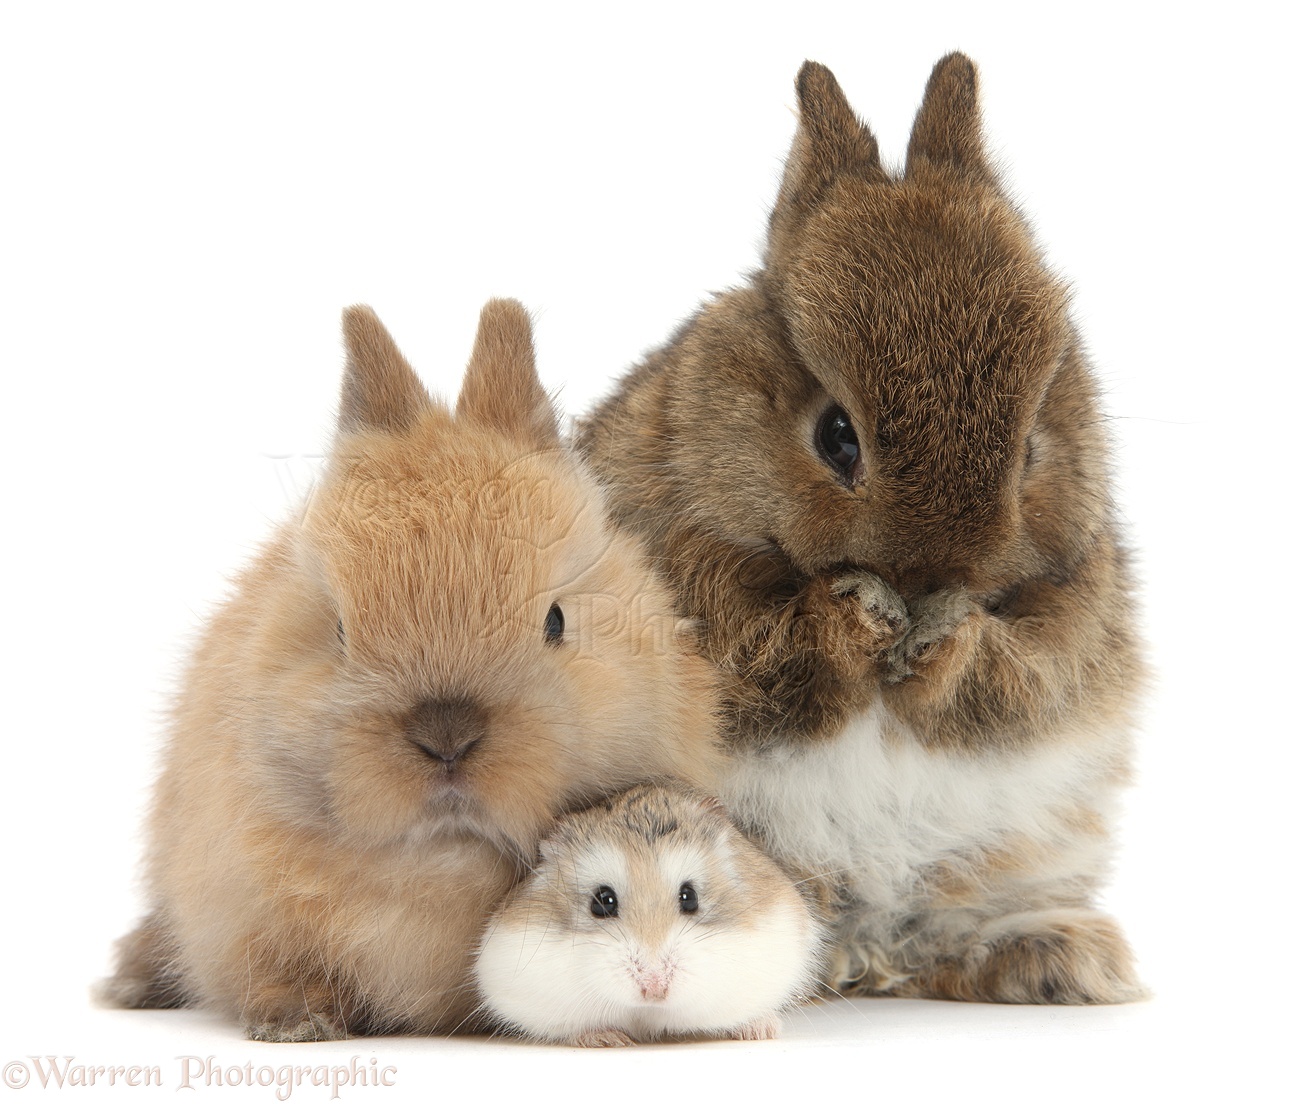 39700-Roborovski-Hamster-with-cute-baby-bunnies-white-background.jpg